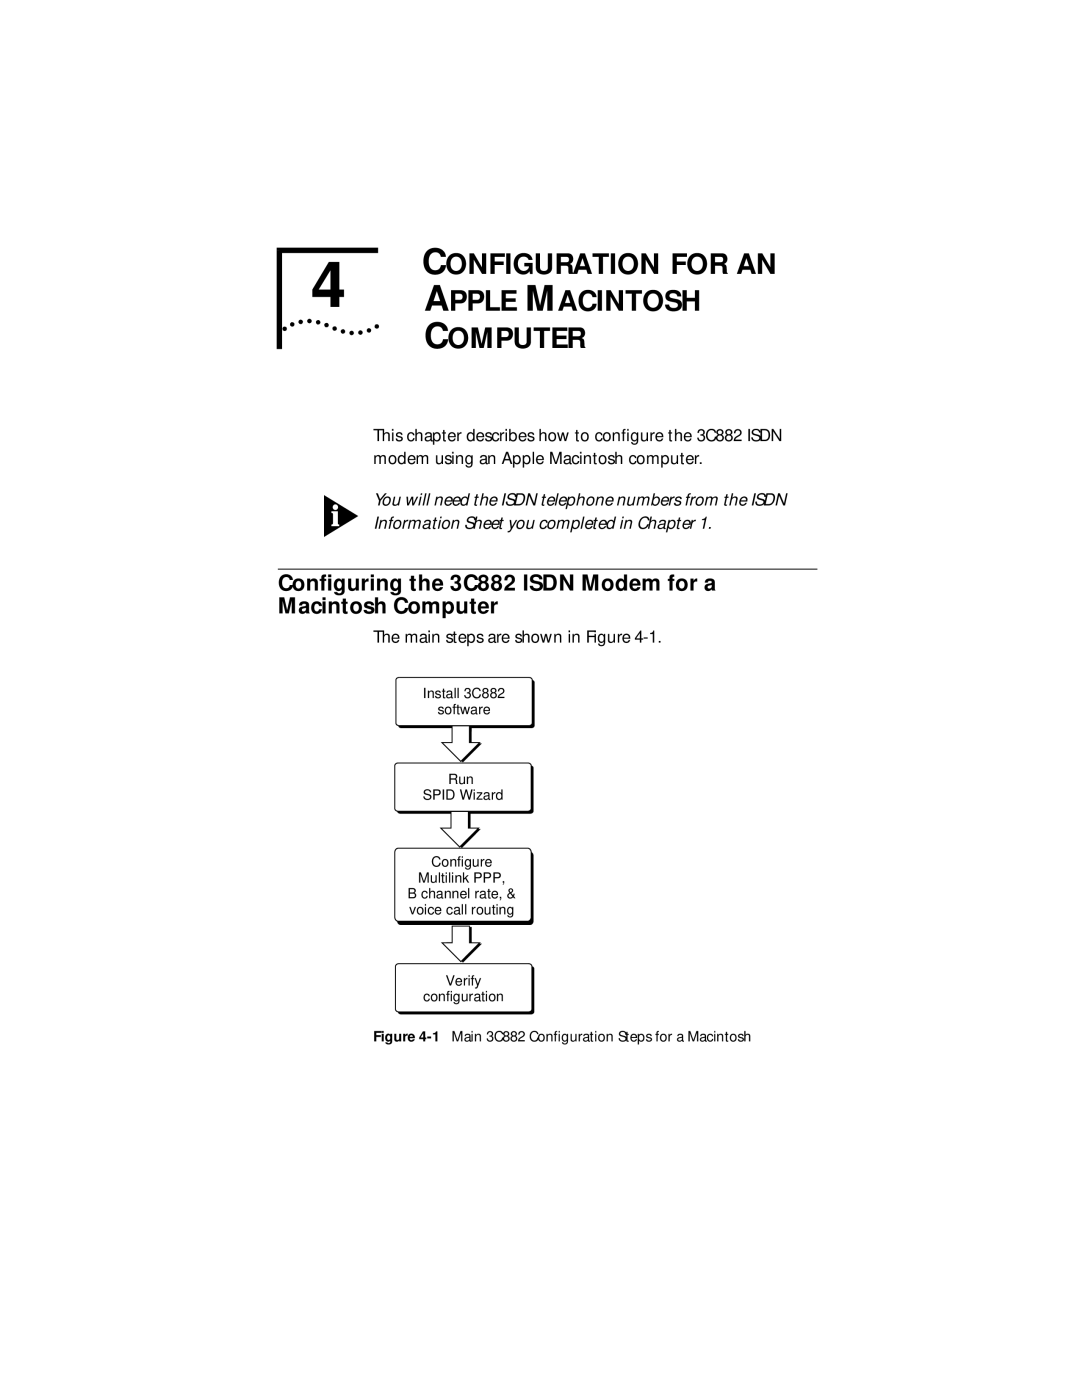 3Com manual Configuration for AN Apple Macintosh Computer, Conﬁguring the 3C882 Isdn Modem for a Macintosh Computer 